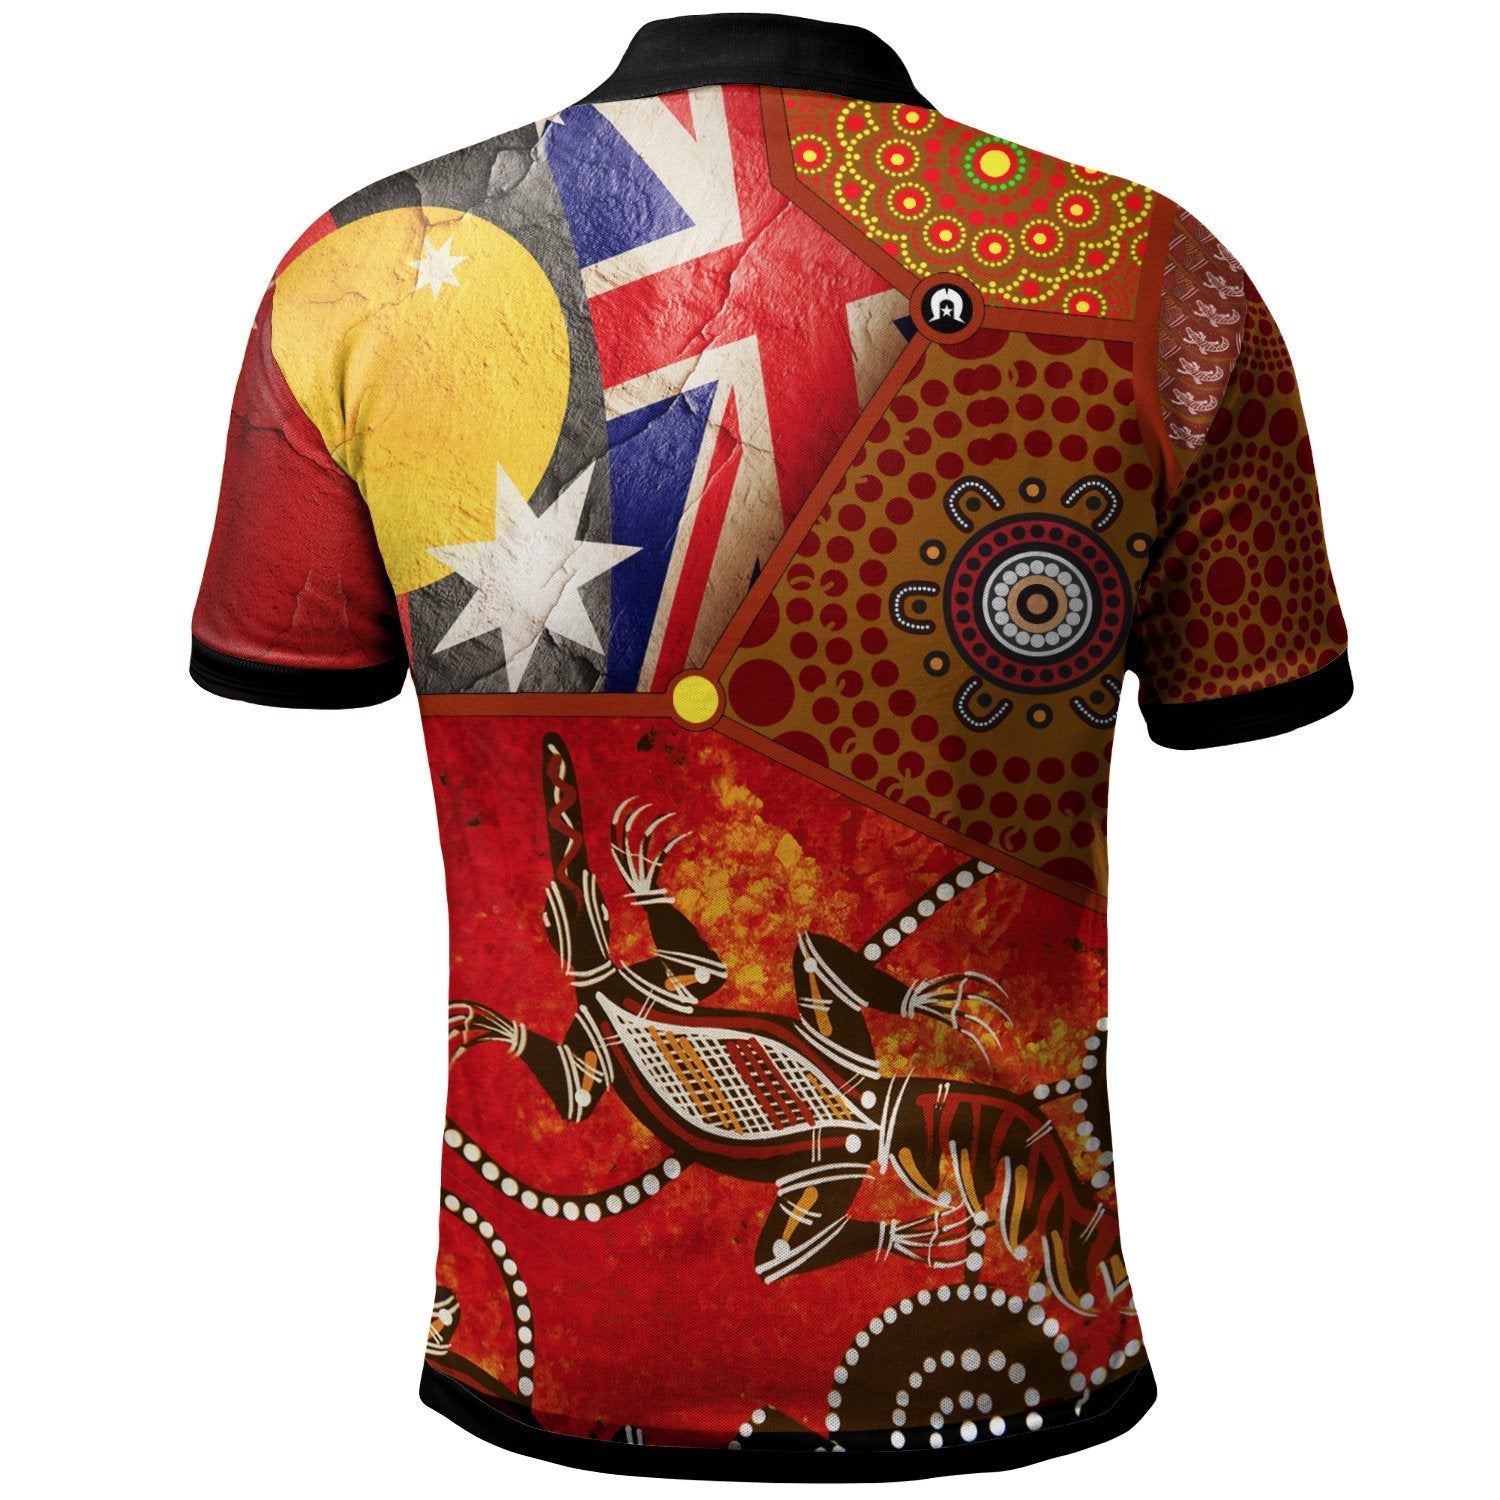 polo-shirt-aboriginal-dot-patterns-flags-crocodile